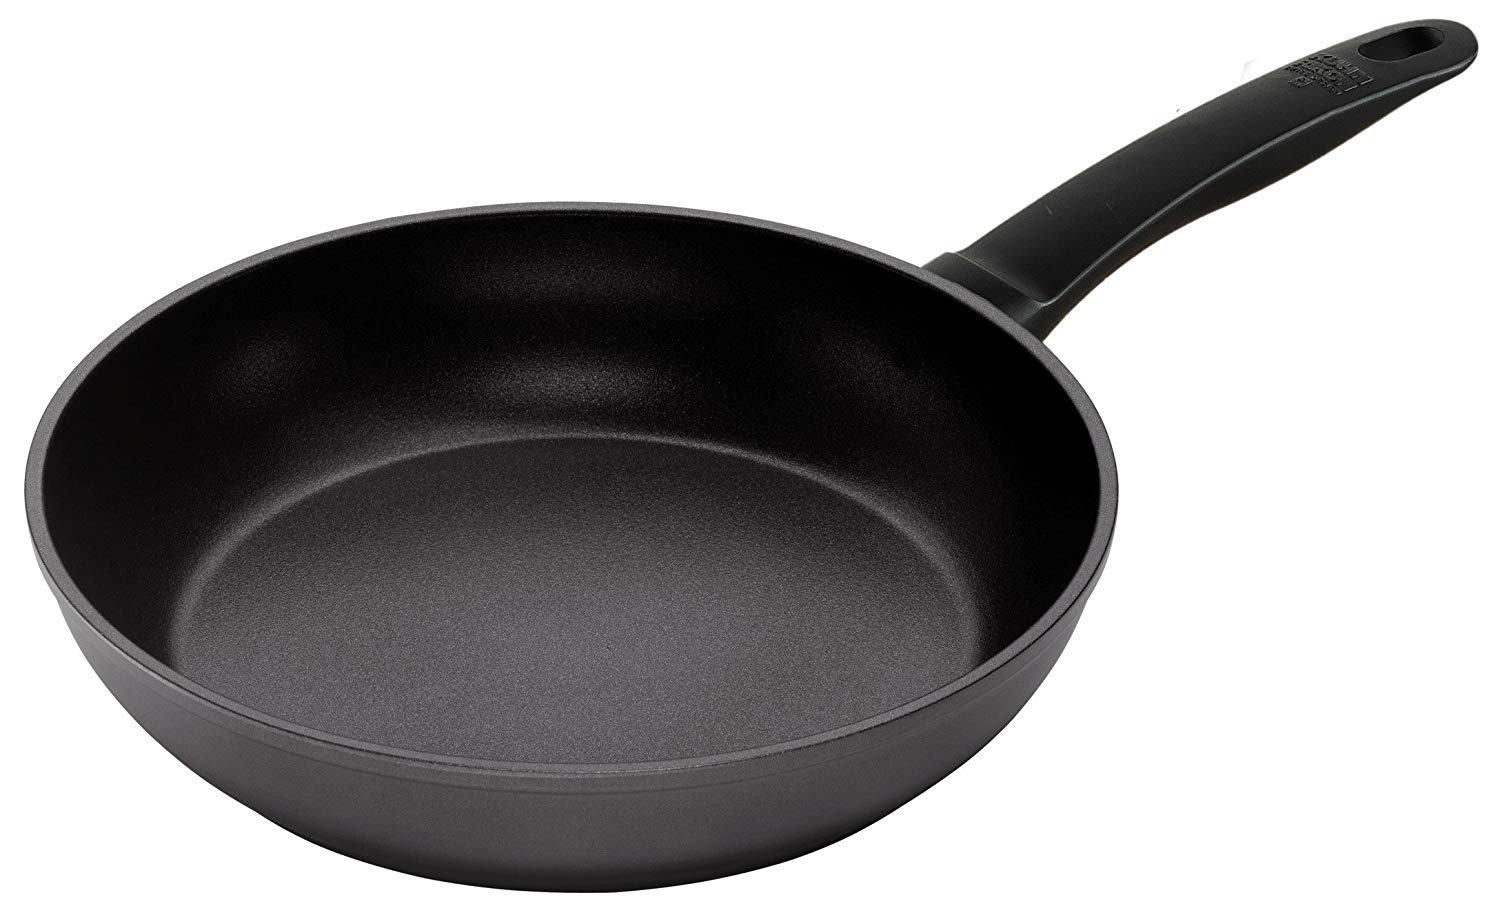 Kuhn Rikon 20 Cm Easy Induction Non Stick Frying Pan, Black